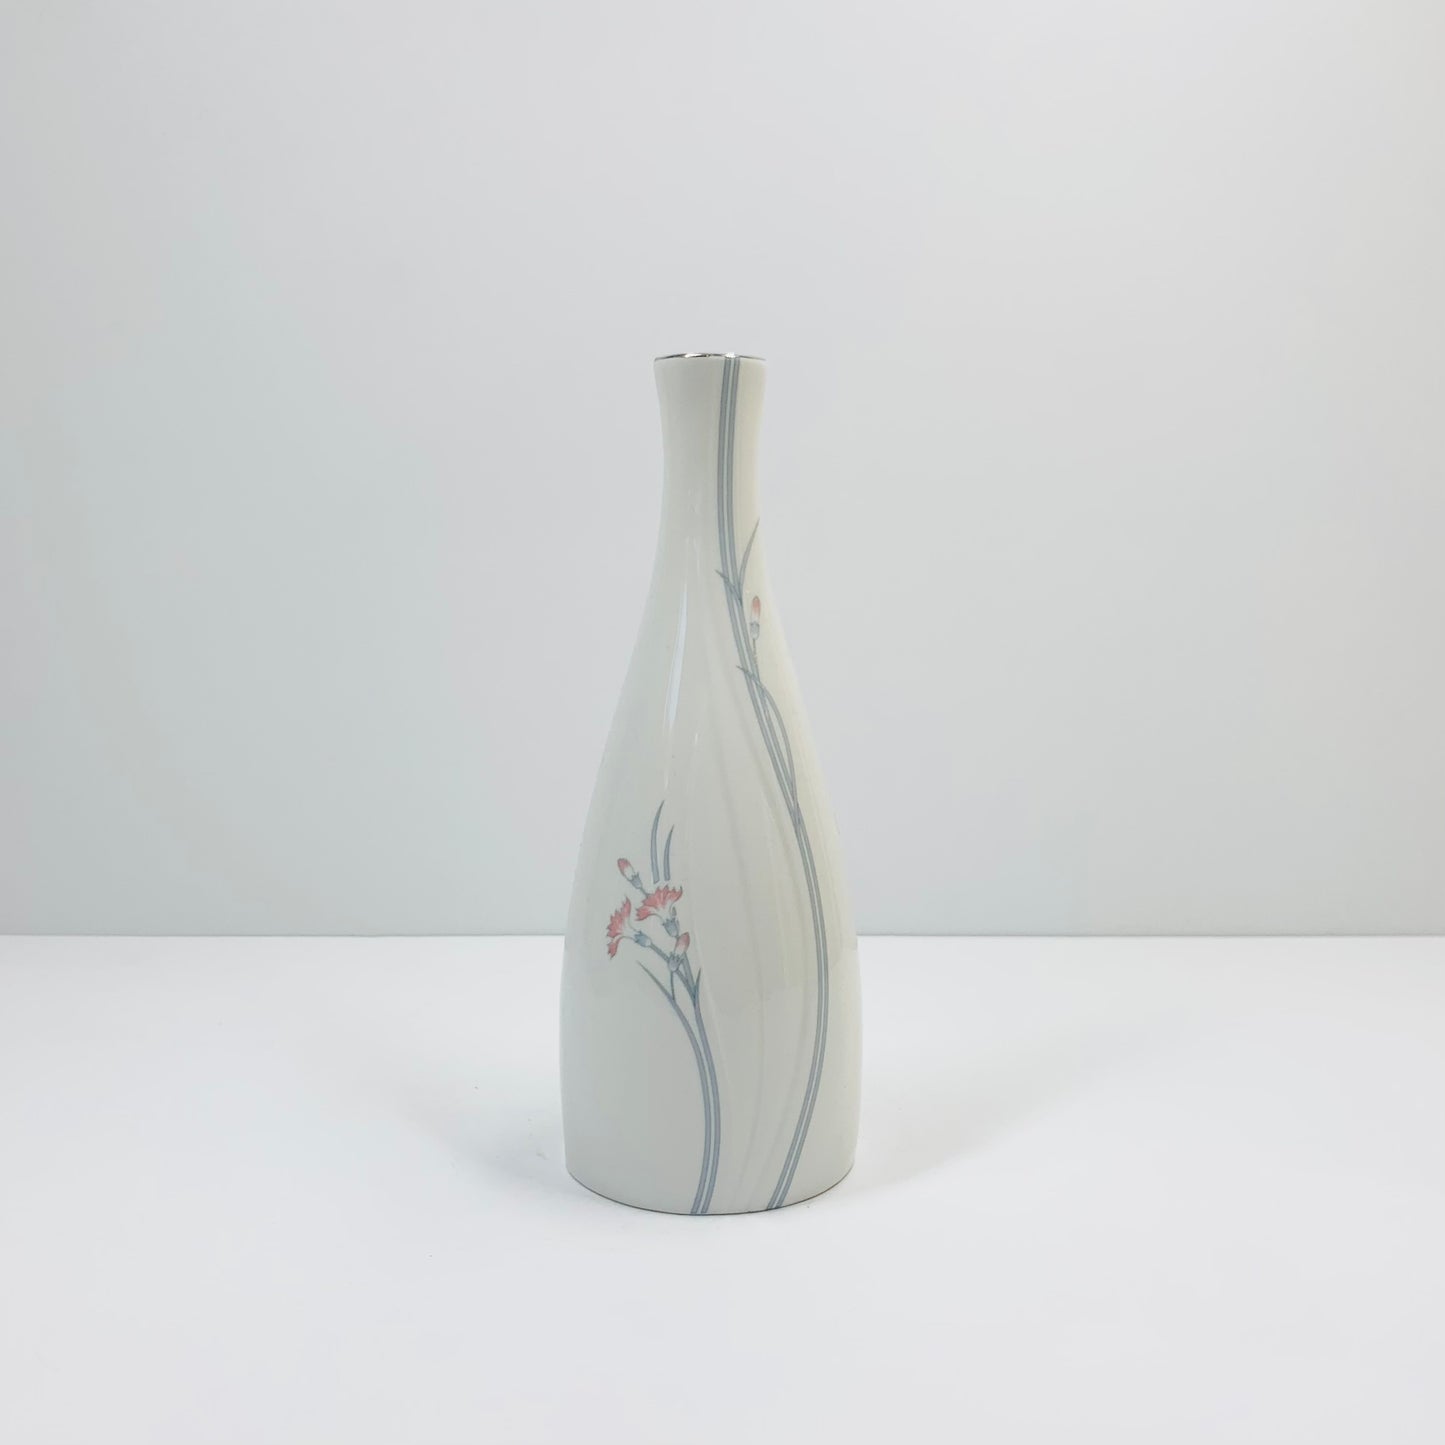 Vintage Japanese white porcelain posy vase